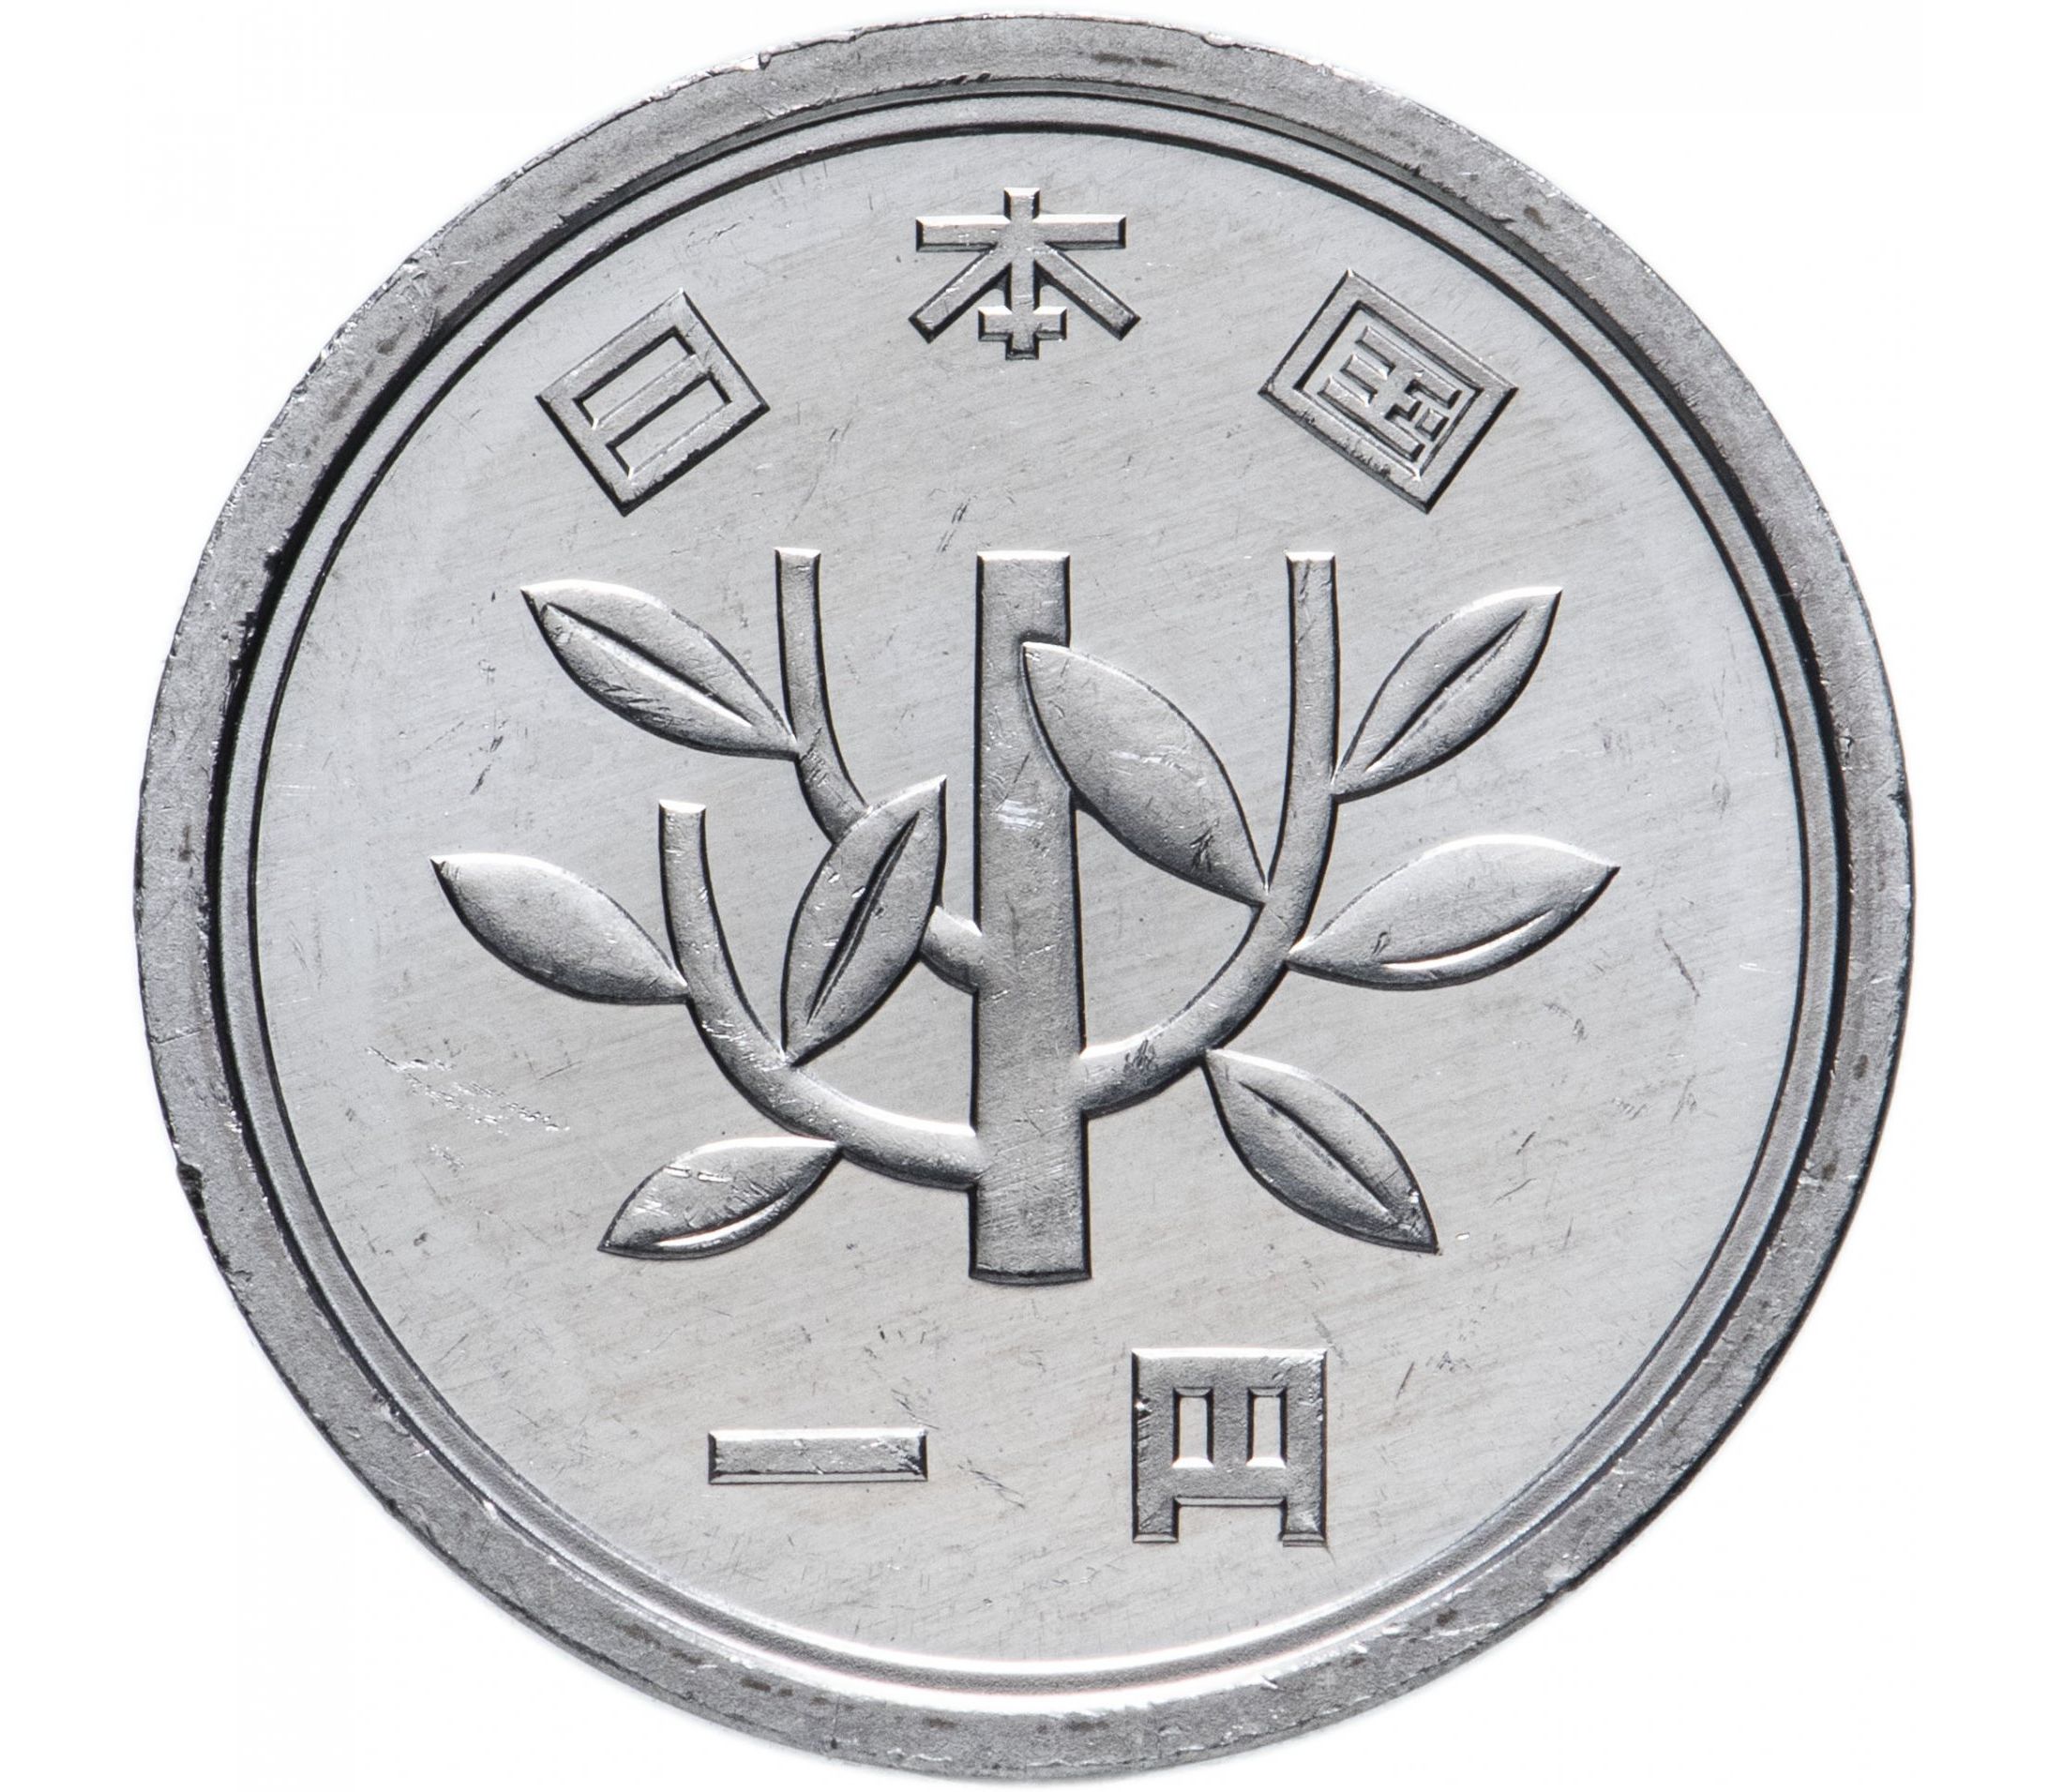 First coins. Монета 1 йена Япония. Монета Япония 1 йена 1989. Монета 1 йена 1870. Монета Япония 1 йена 1995.